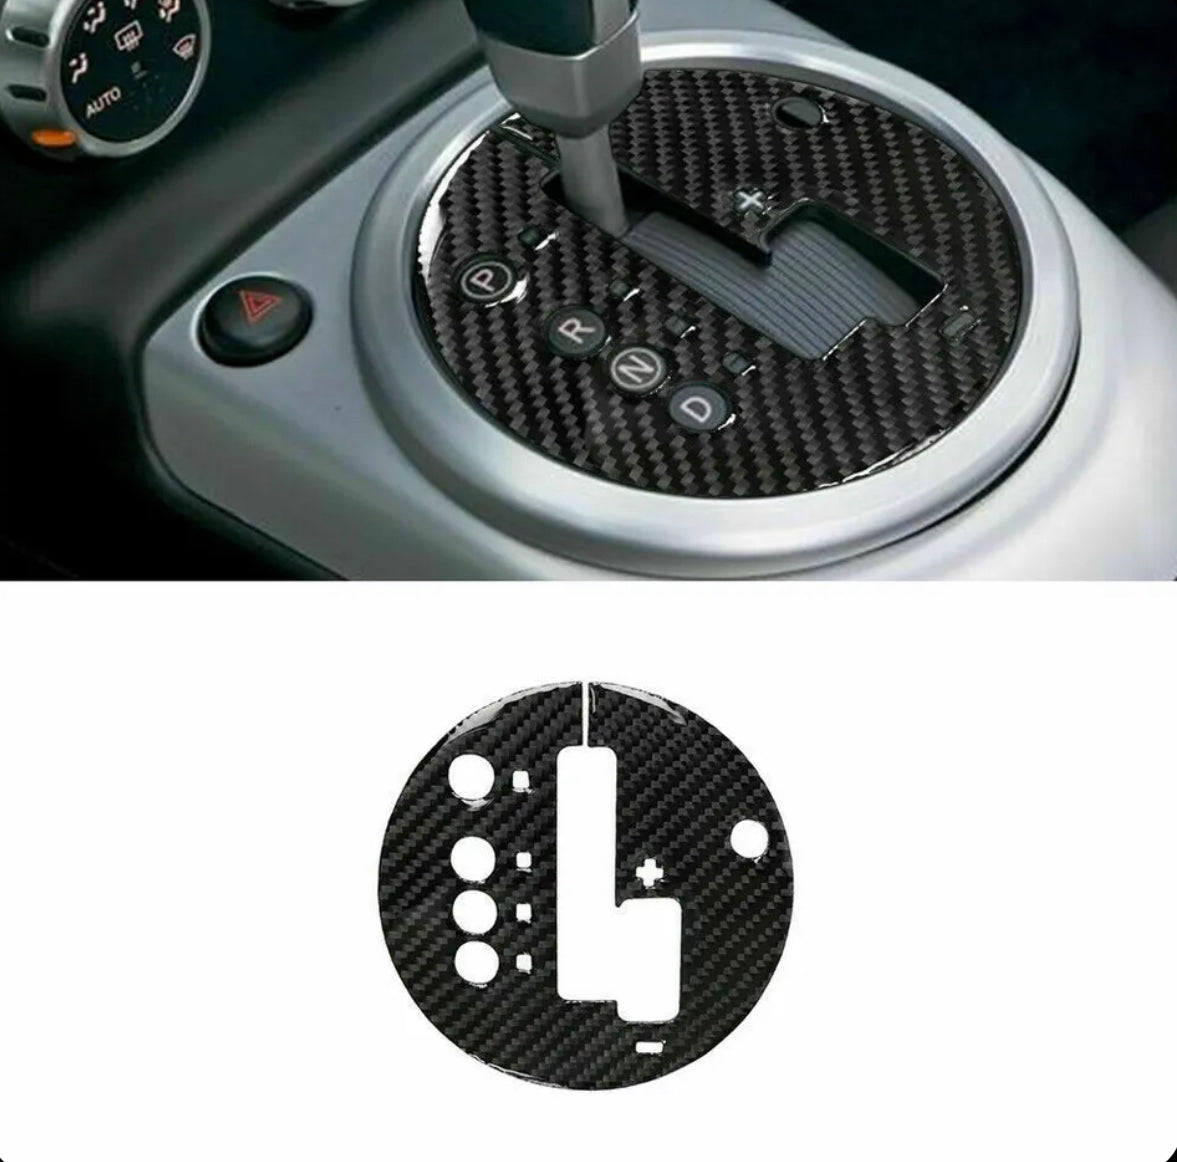 Carbon Fiber Interior Gear Shift Panel Cover Trim Fit For Nissan 350Z 2006-2009